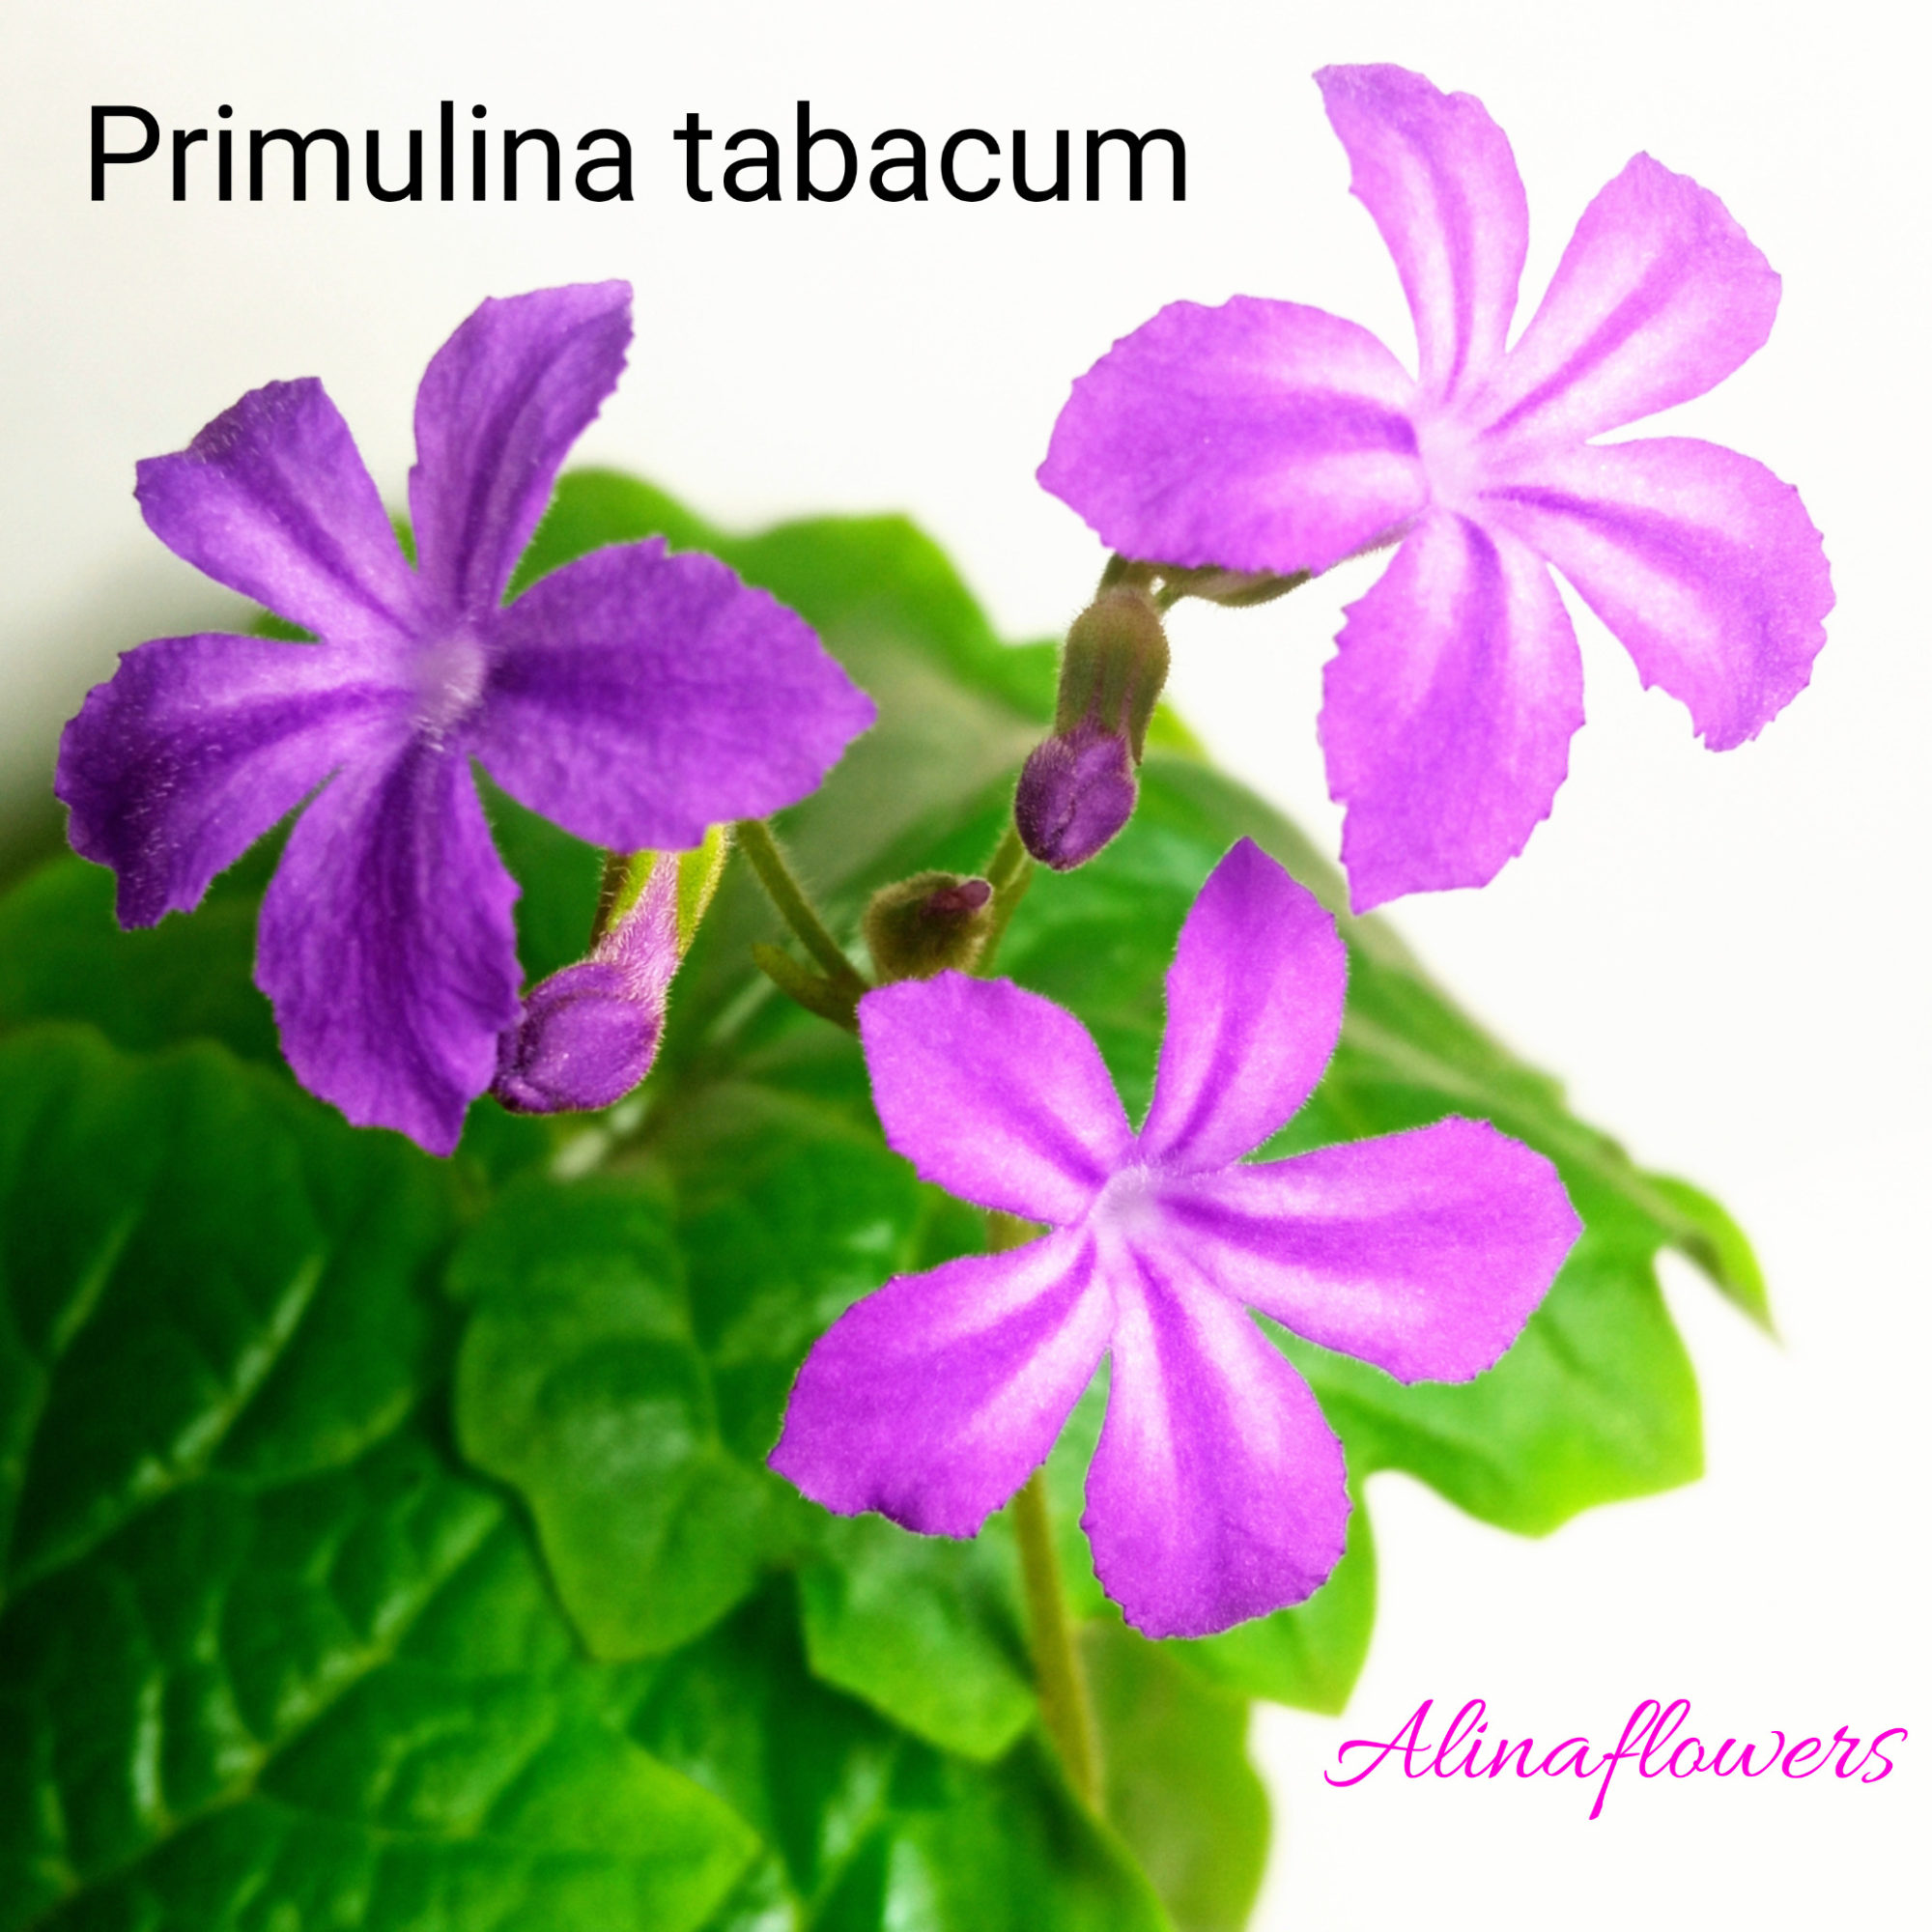 Primulina tabacum